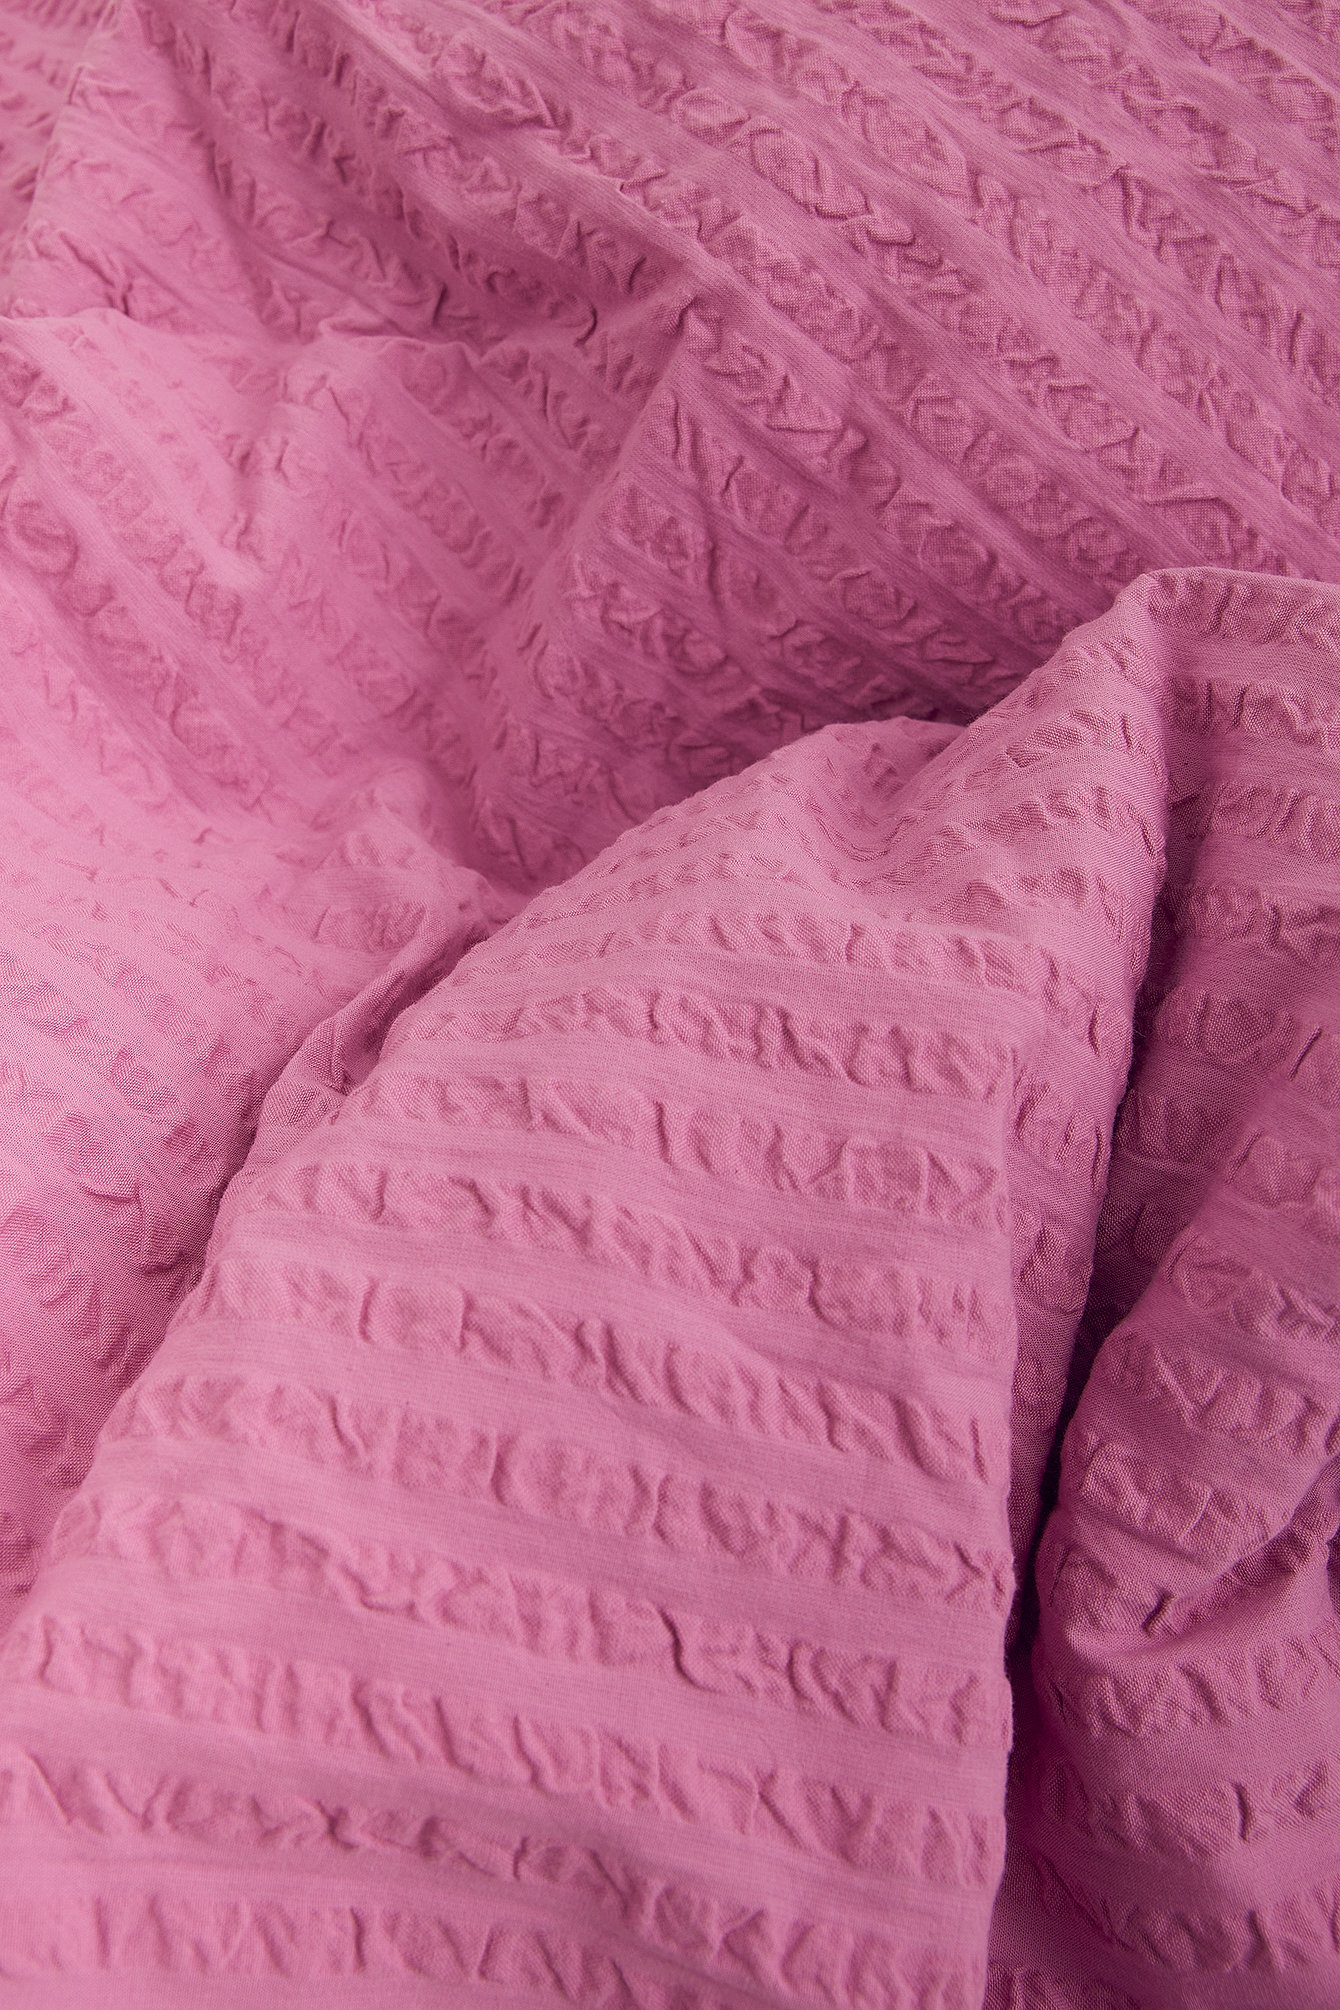 Pink Seersucker Pillowcase